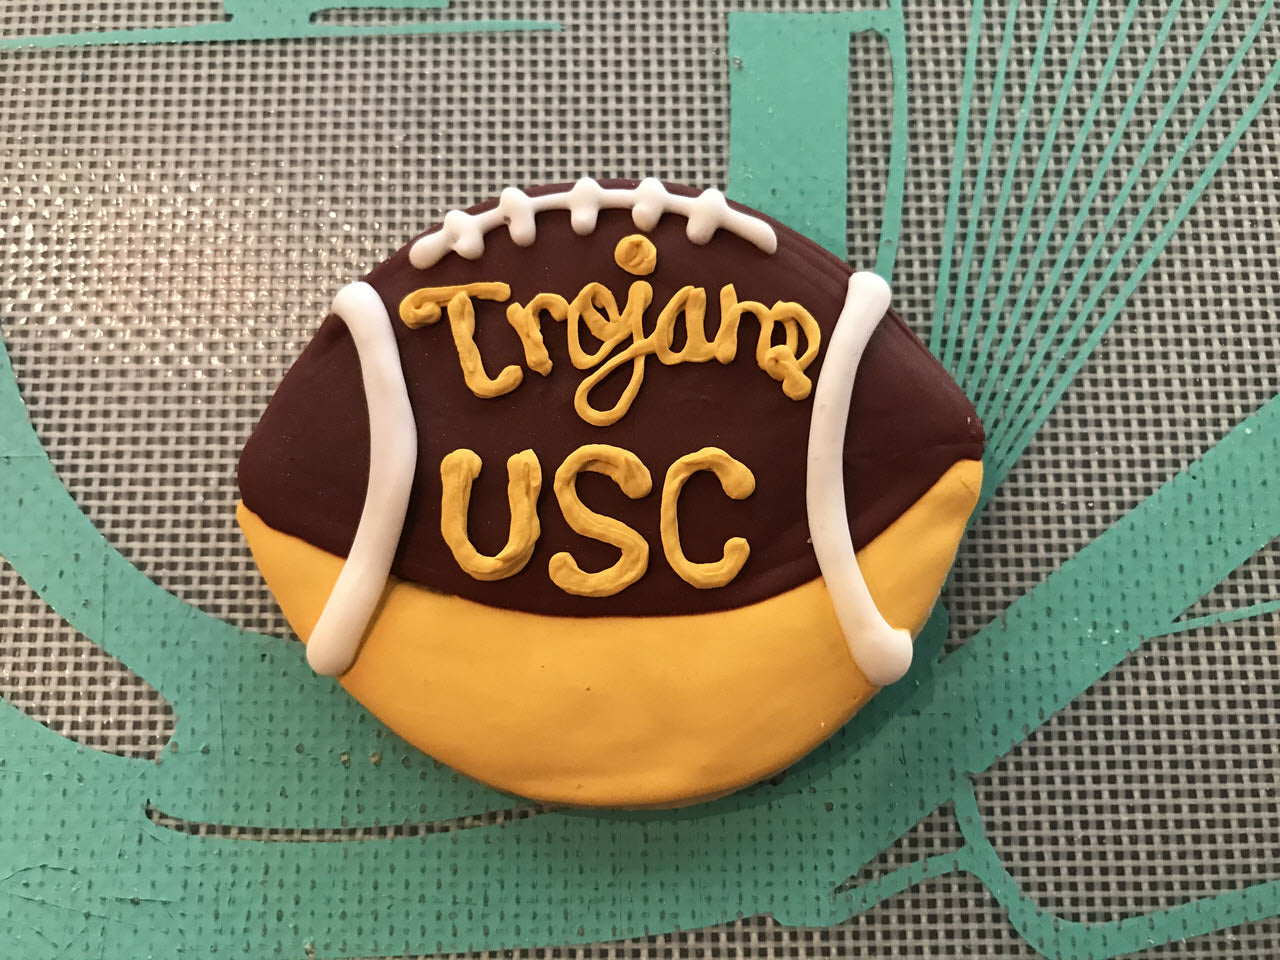 Trojans football sugar cookies